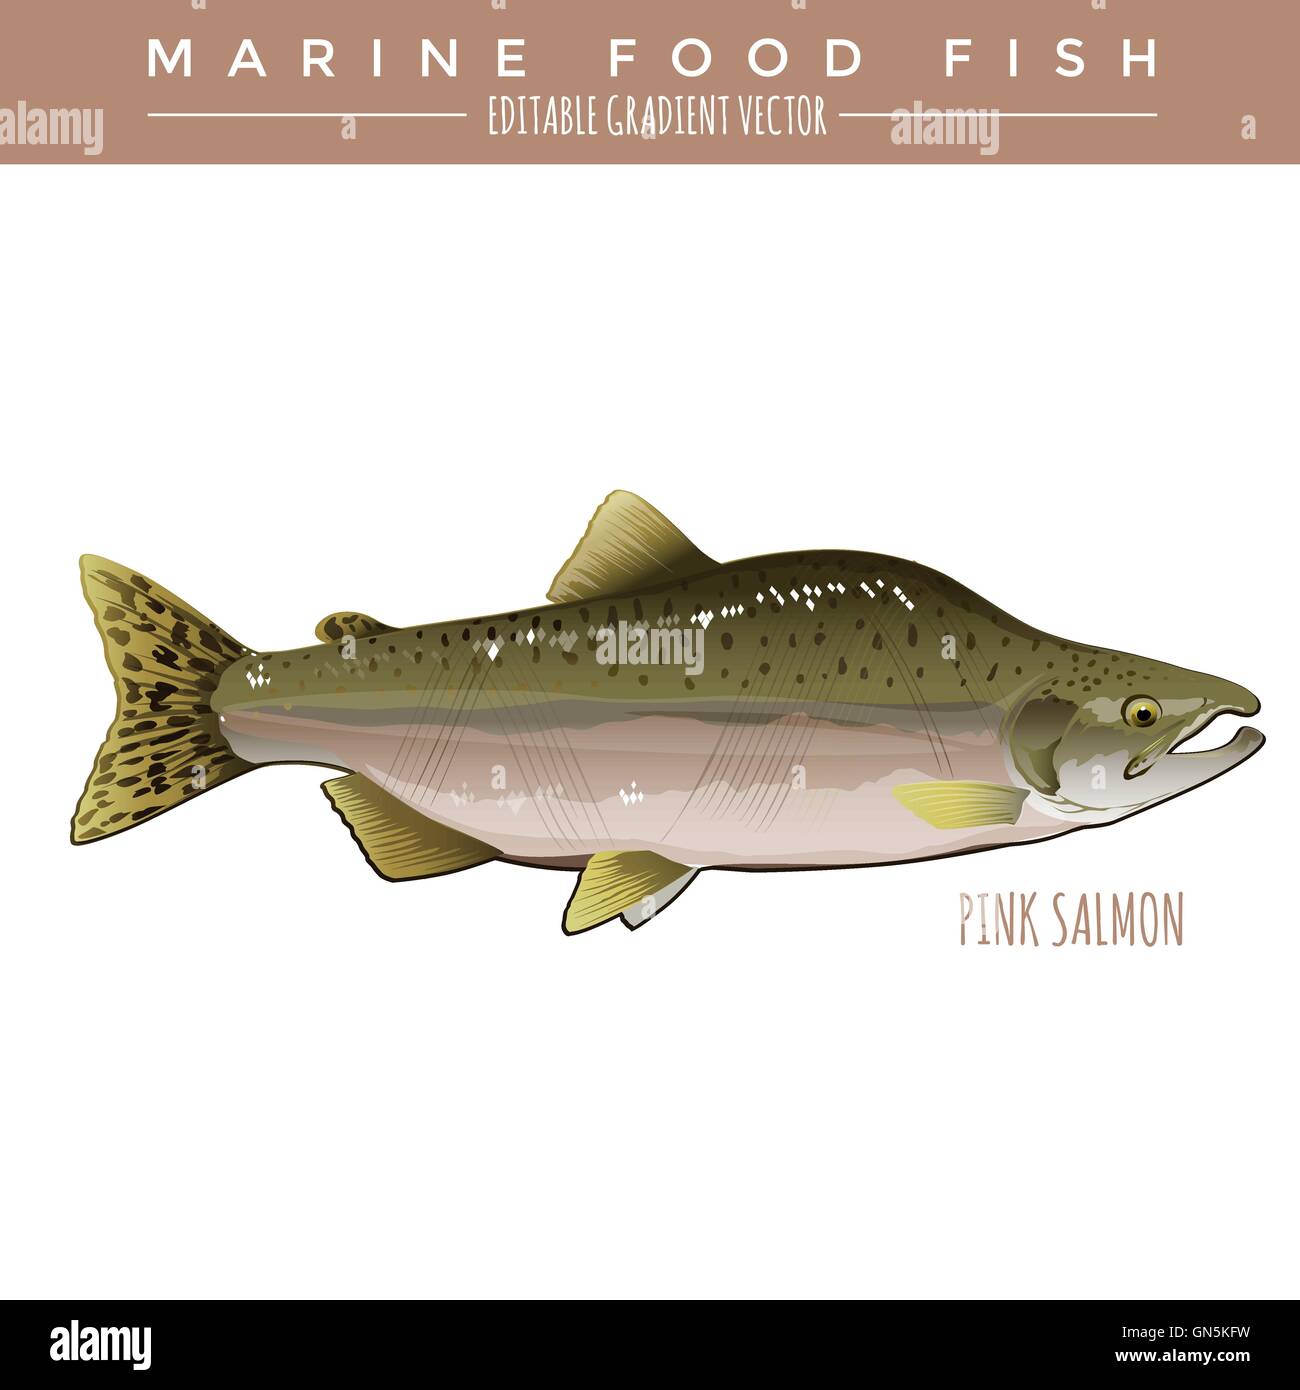 https://c8.alamy.com/comp/GN5KFW/pink-salmon-marine-food-fish-GN5KFW.jpg